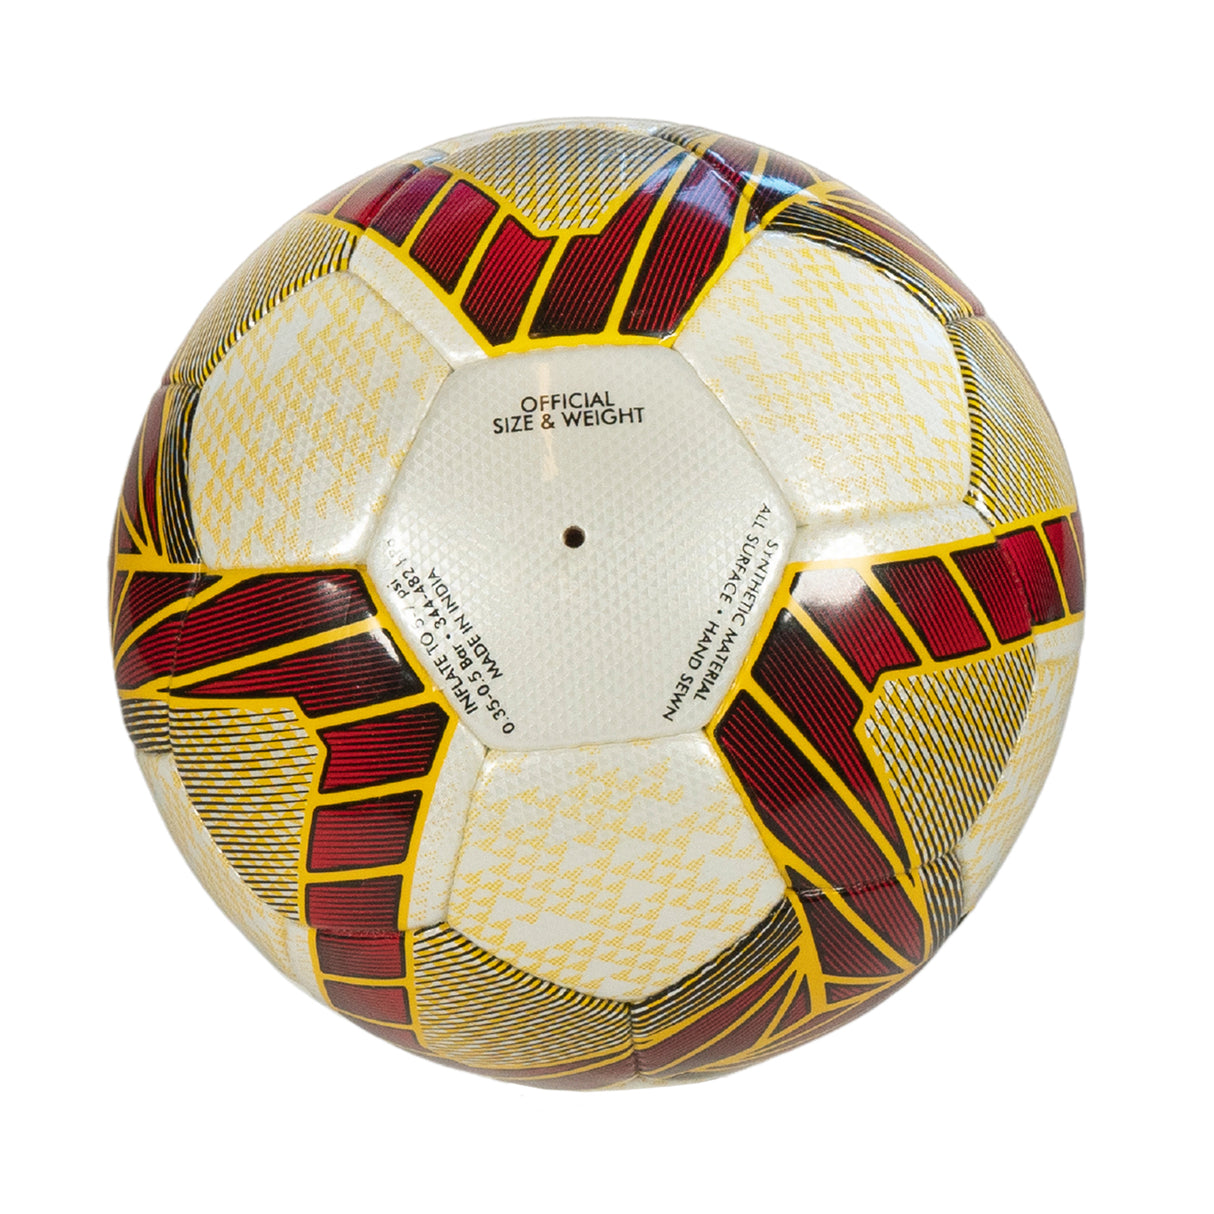 DS Force Futsal Soccer Ball - Size 5